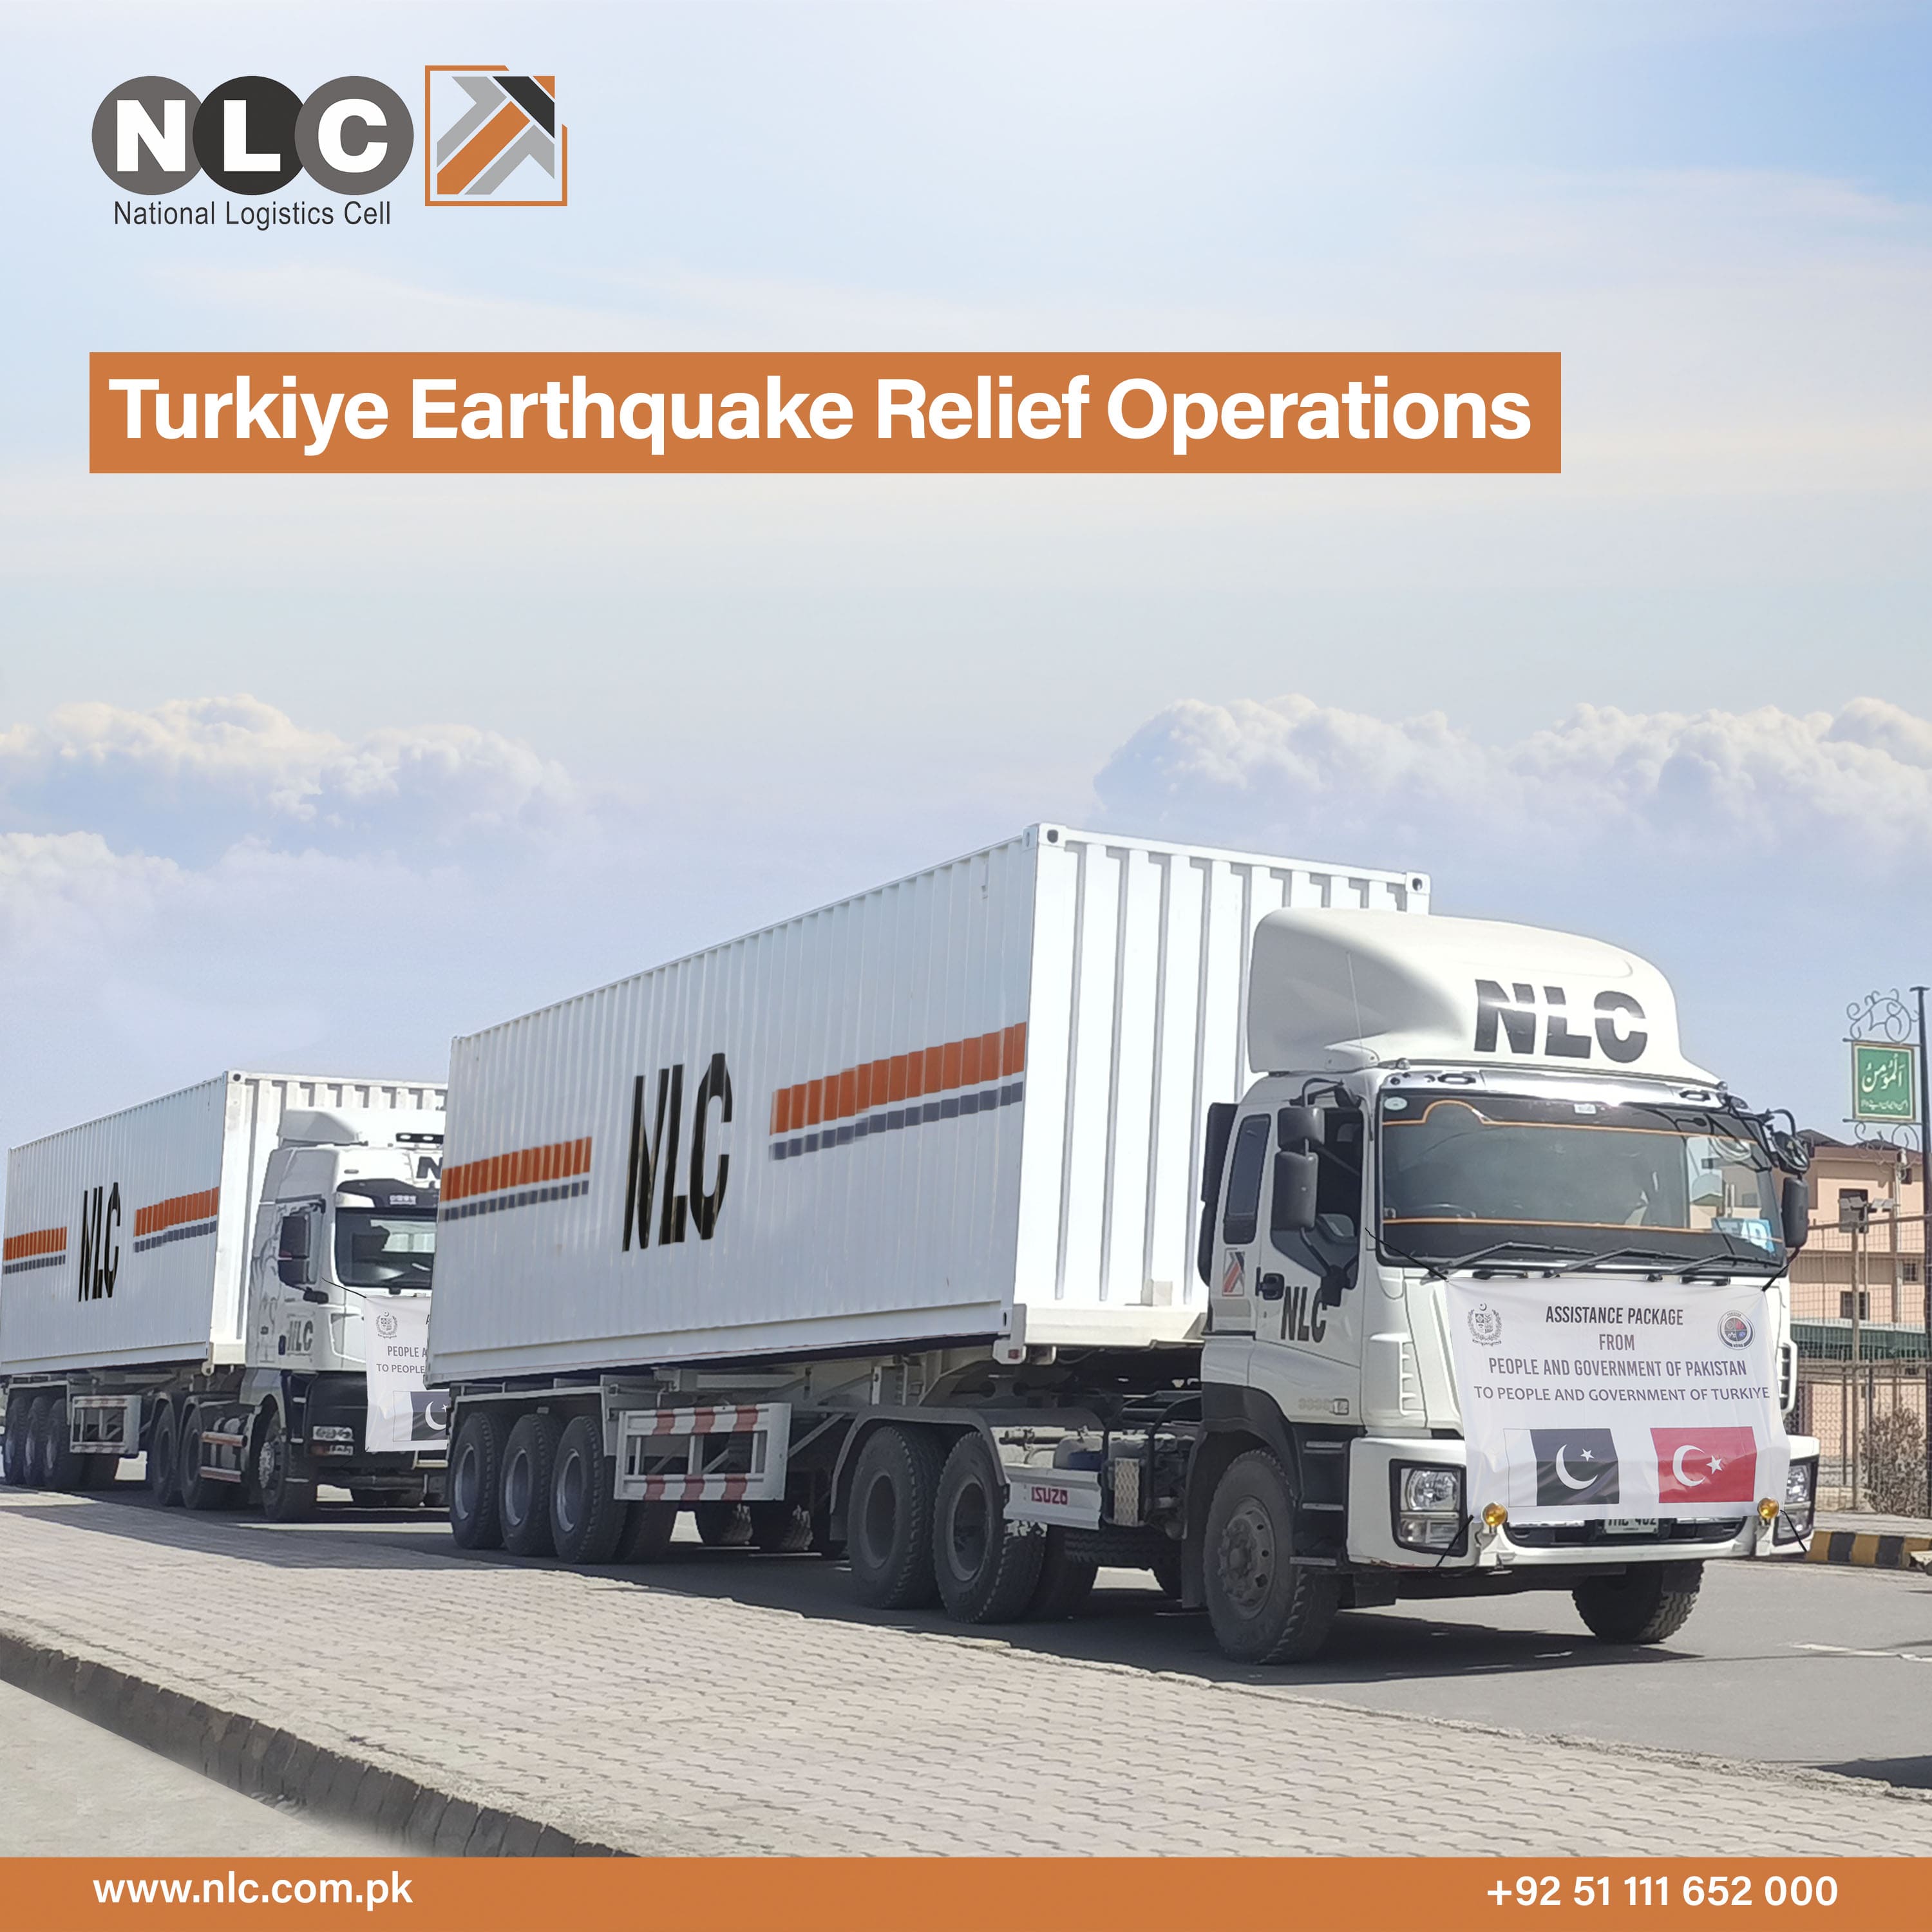 NLC Turkiye earthquake relief operation